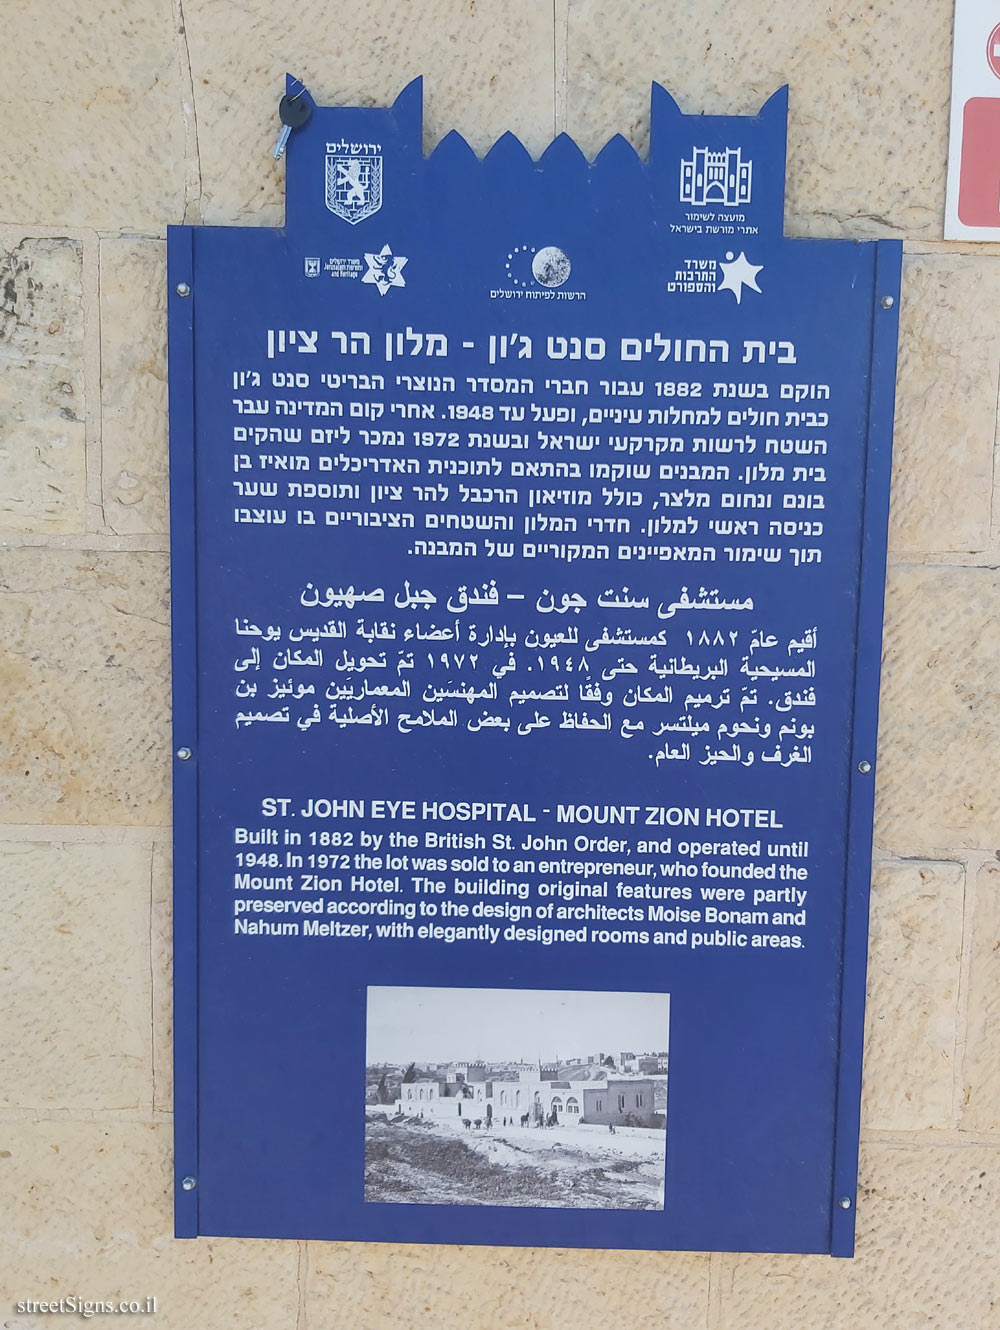 Jerusalem - Heritage Sites in Israel - St. John Eye Hospital - Mount Zion Hotel